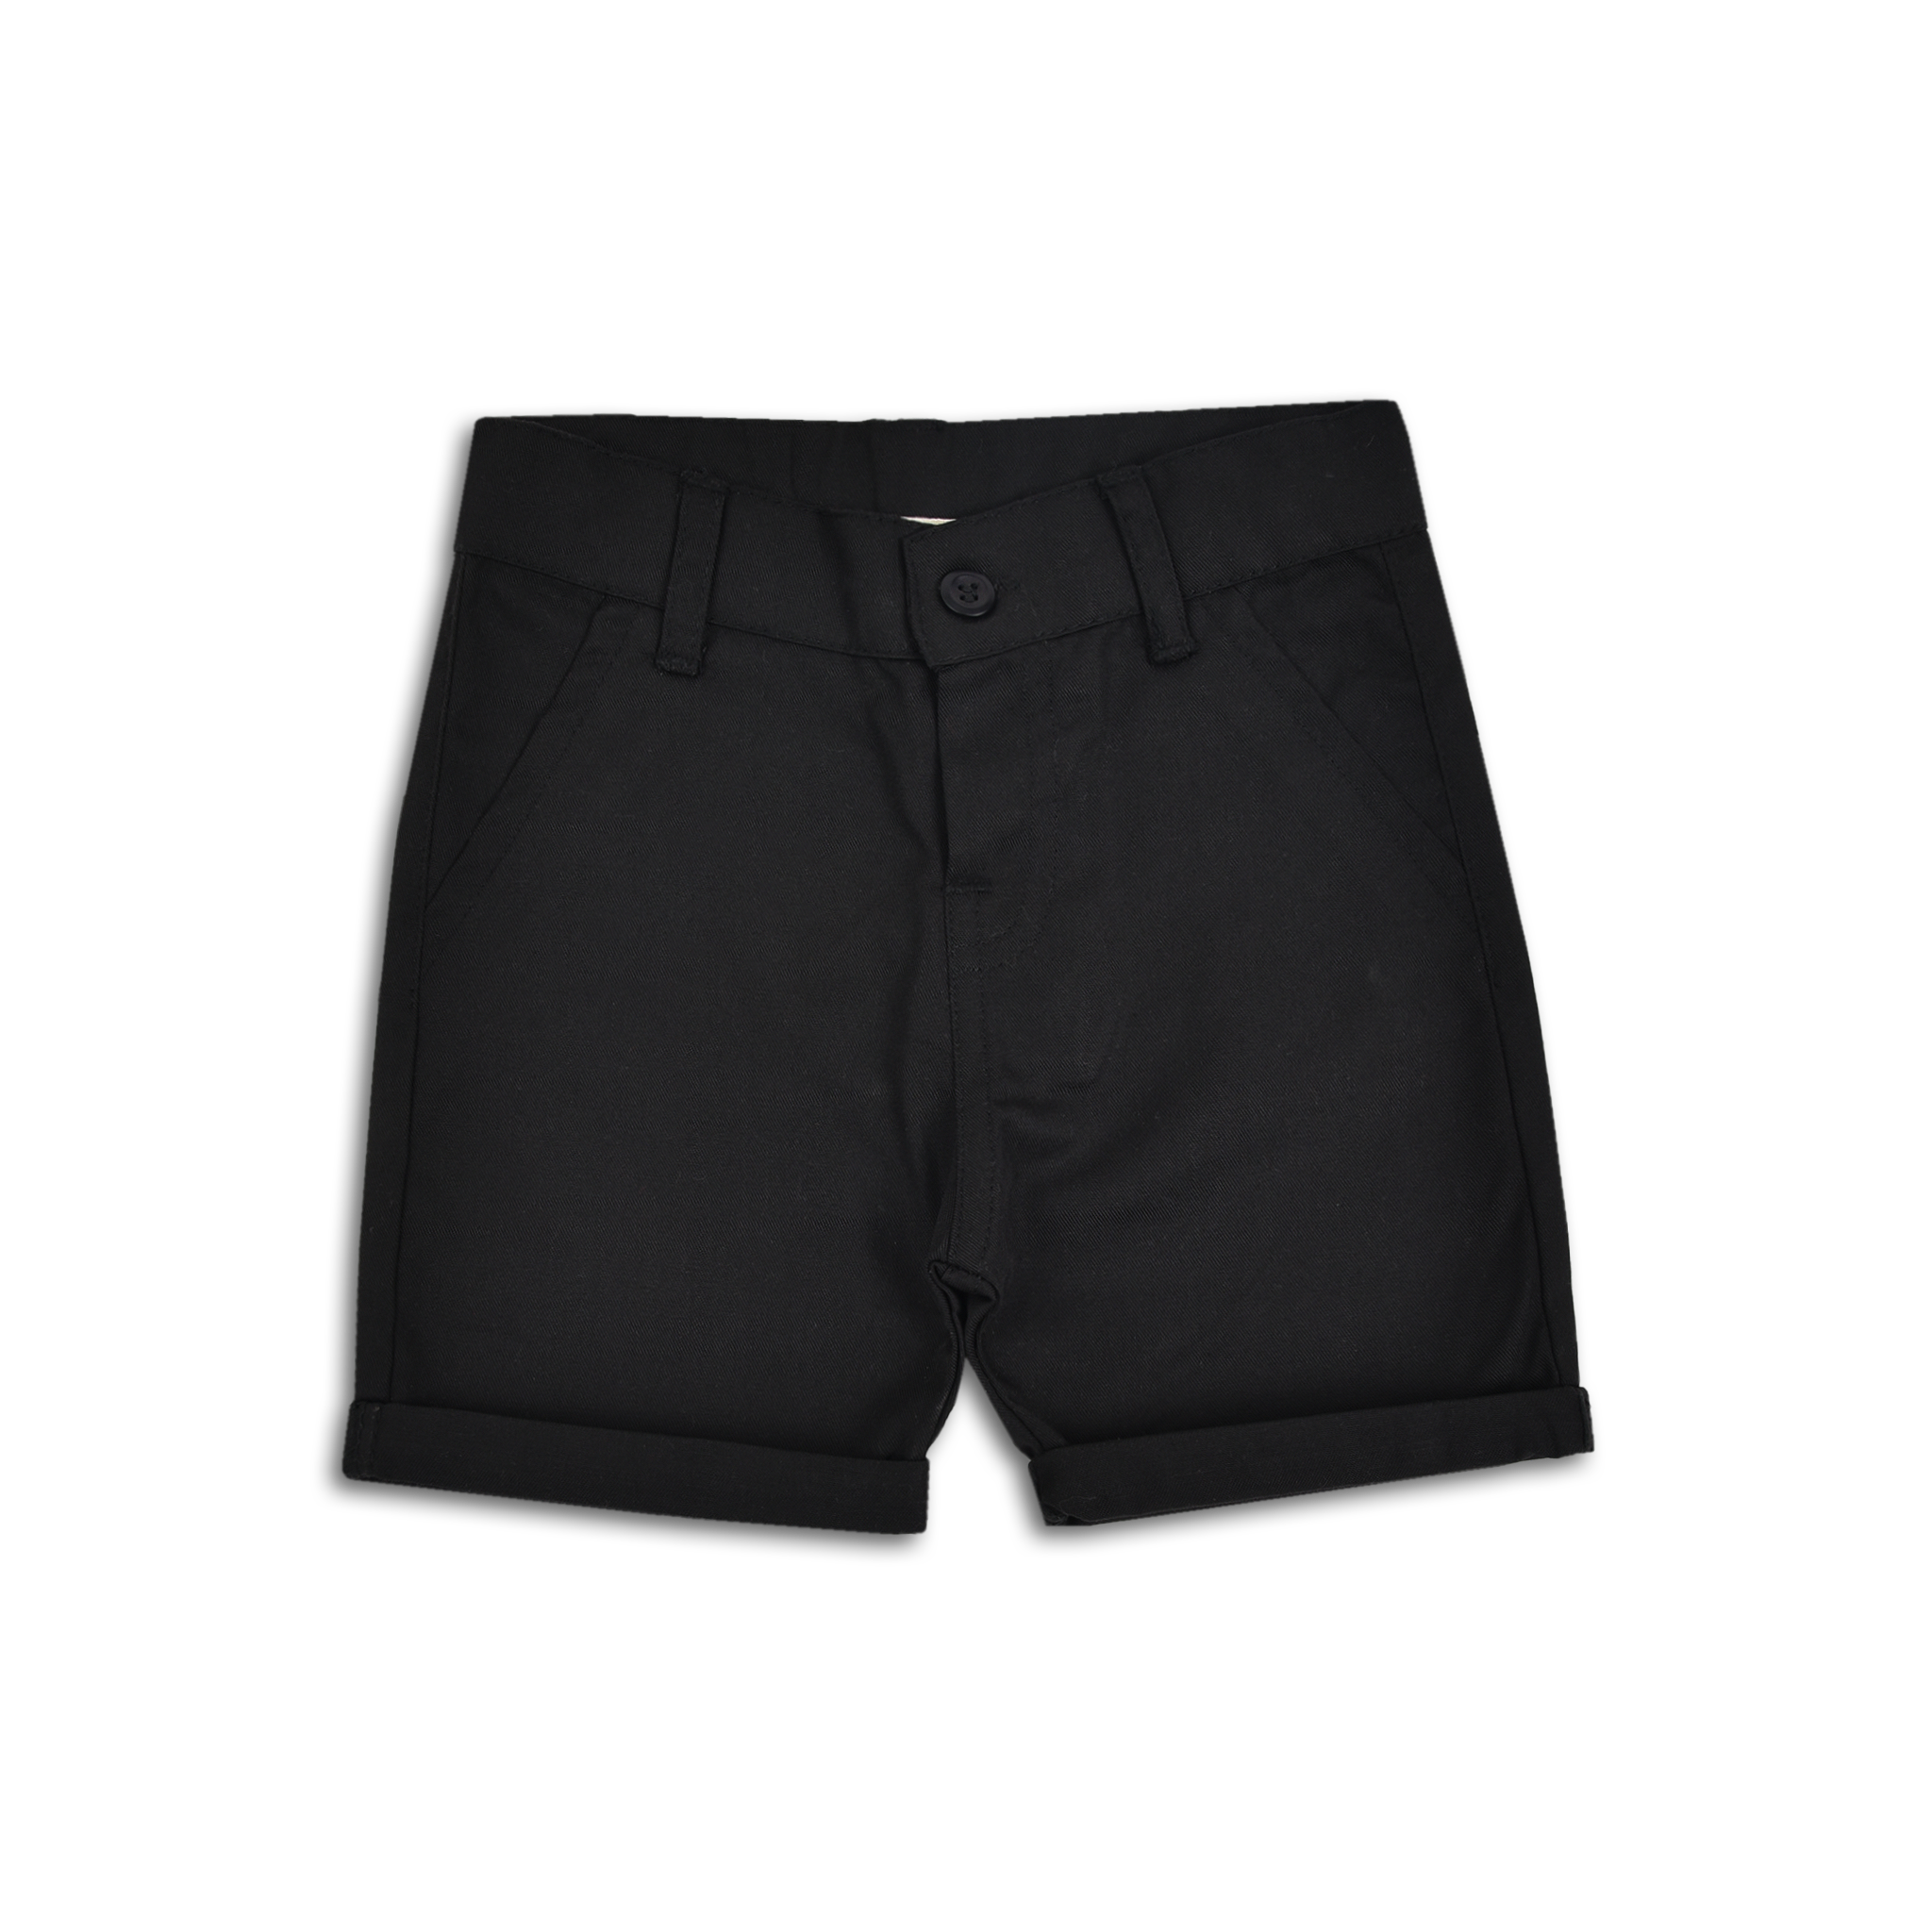 Jet Black Cotton Shorts